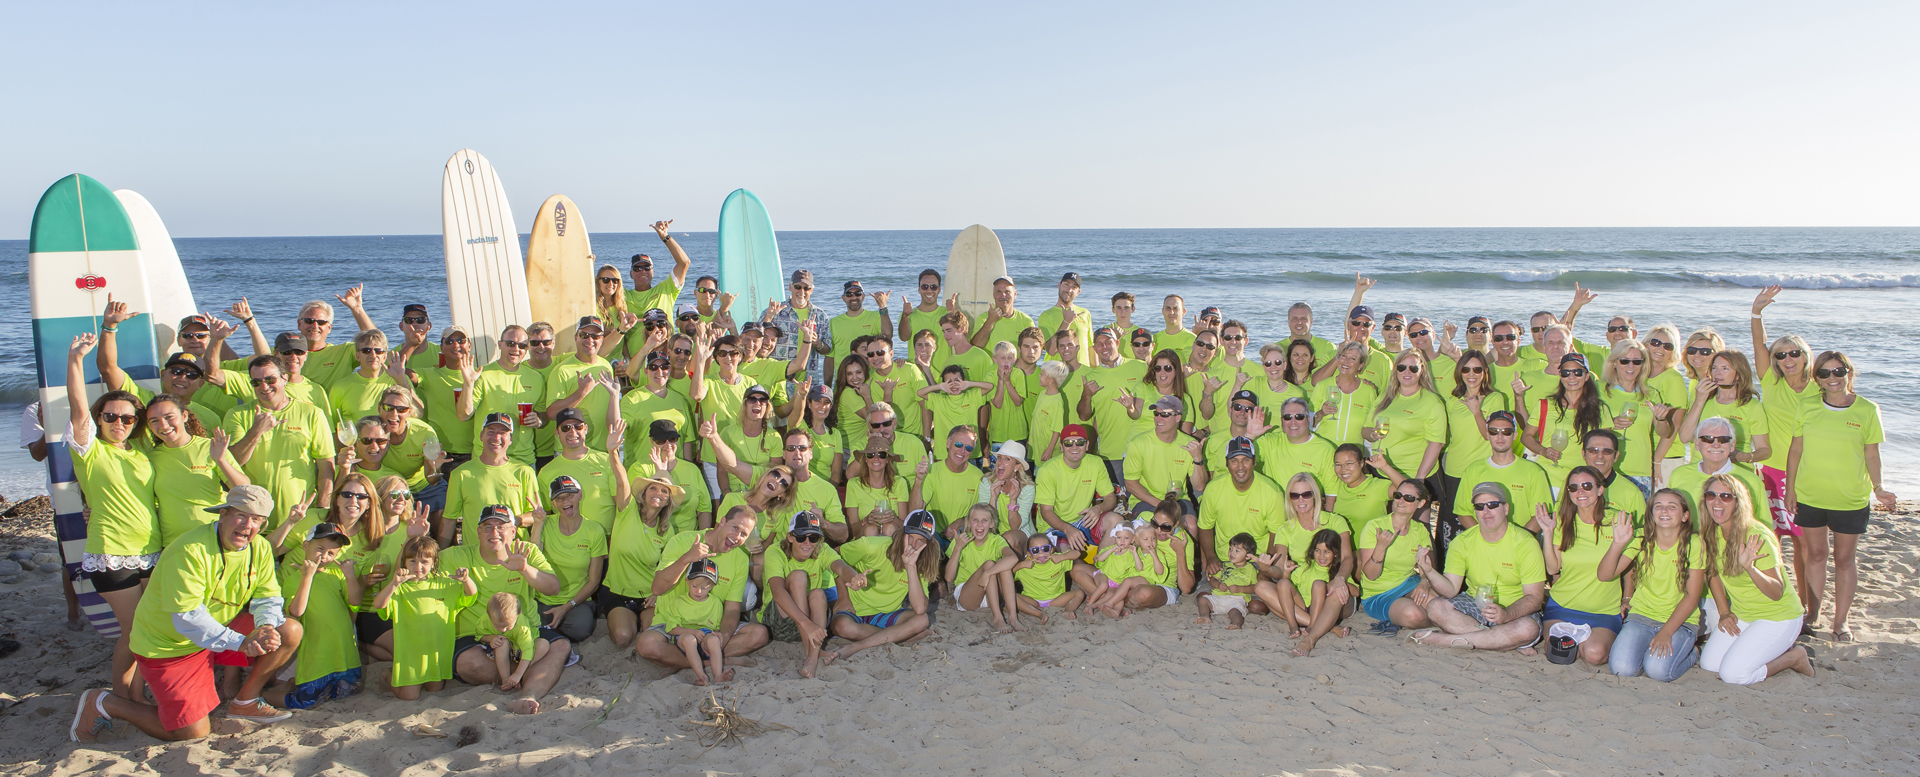 2014 Surf Camp 1